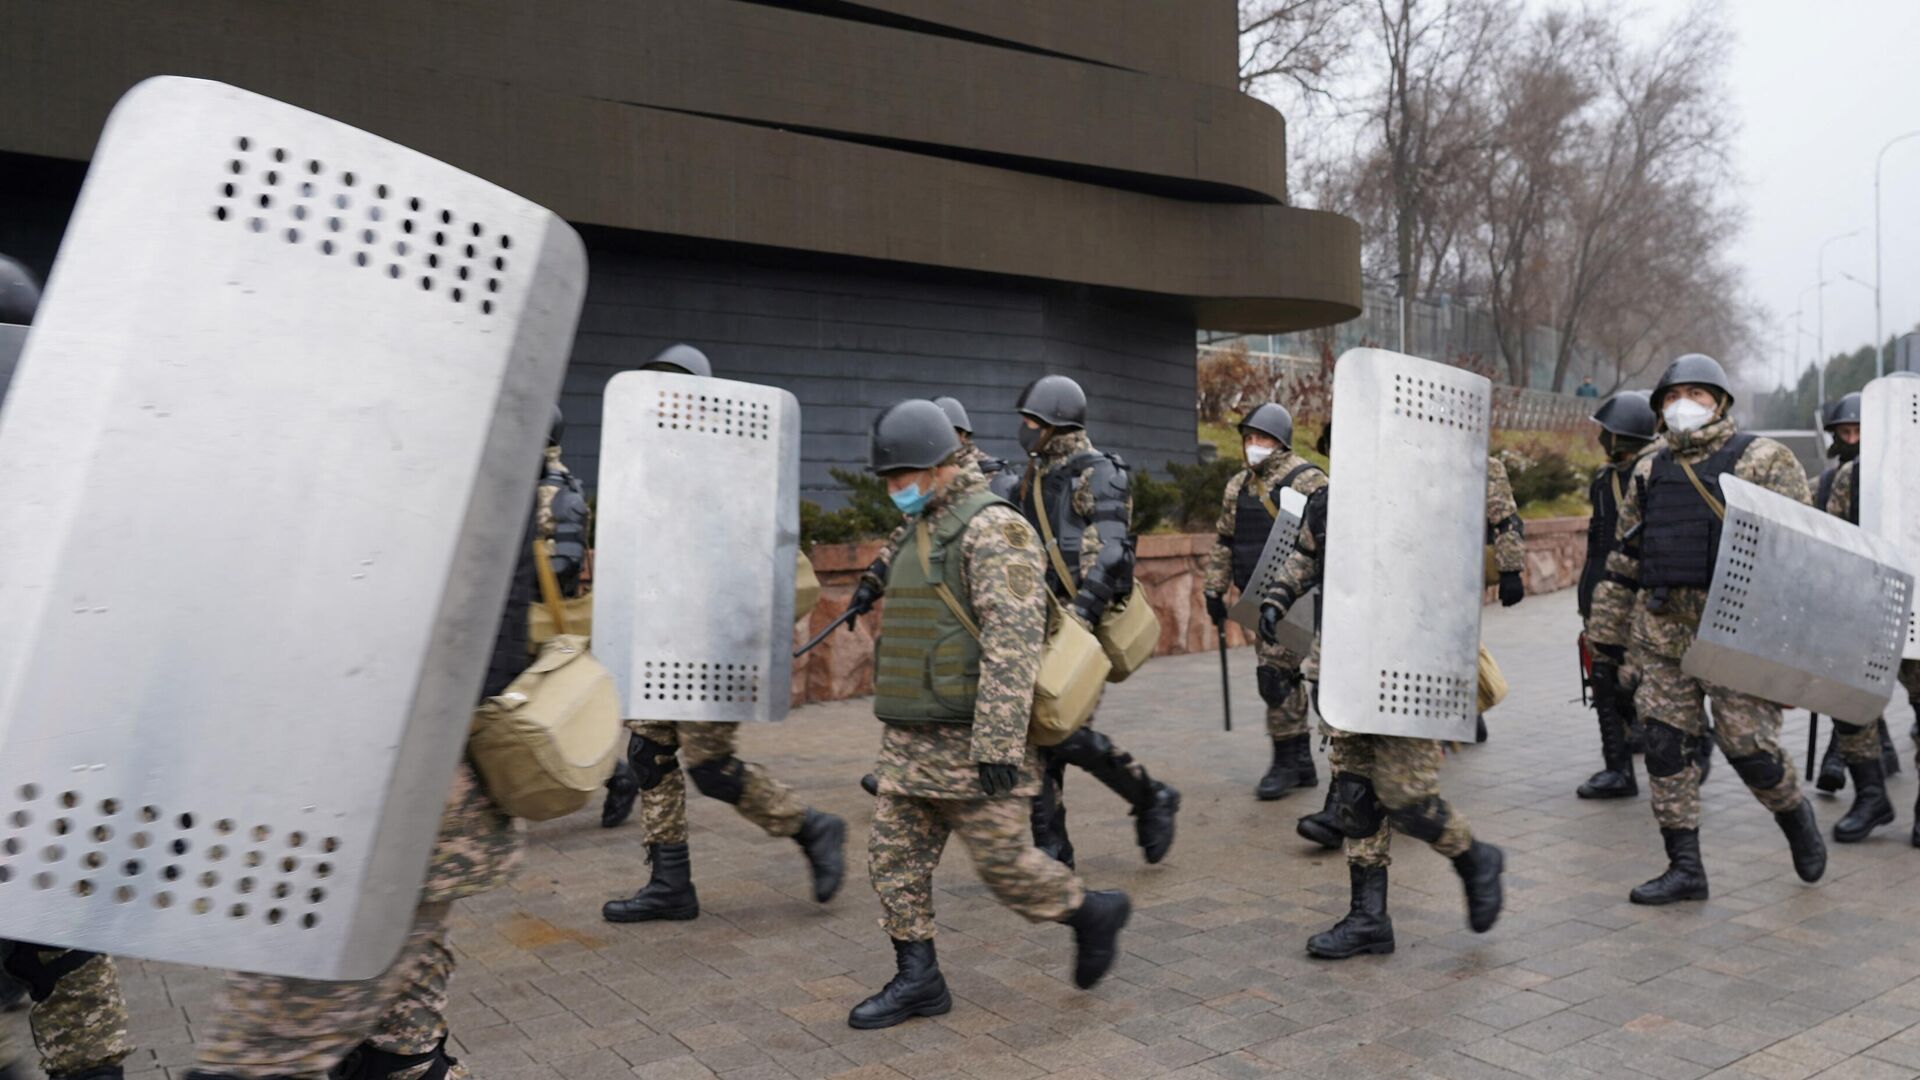 Сотрудники полиции во время акции протеста против повышения цен на газ в Алма-Ате, Казахстан - Sputnik Азербайджан, 1920, 05.01.2022